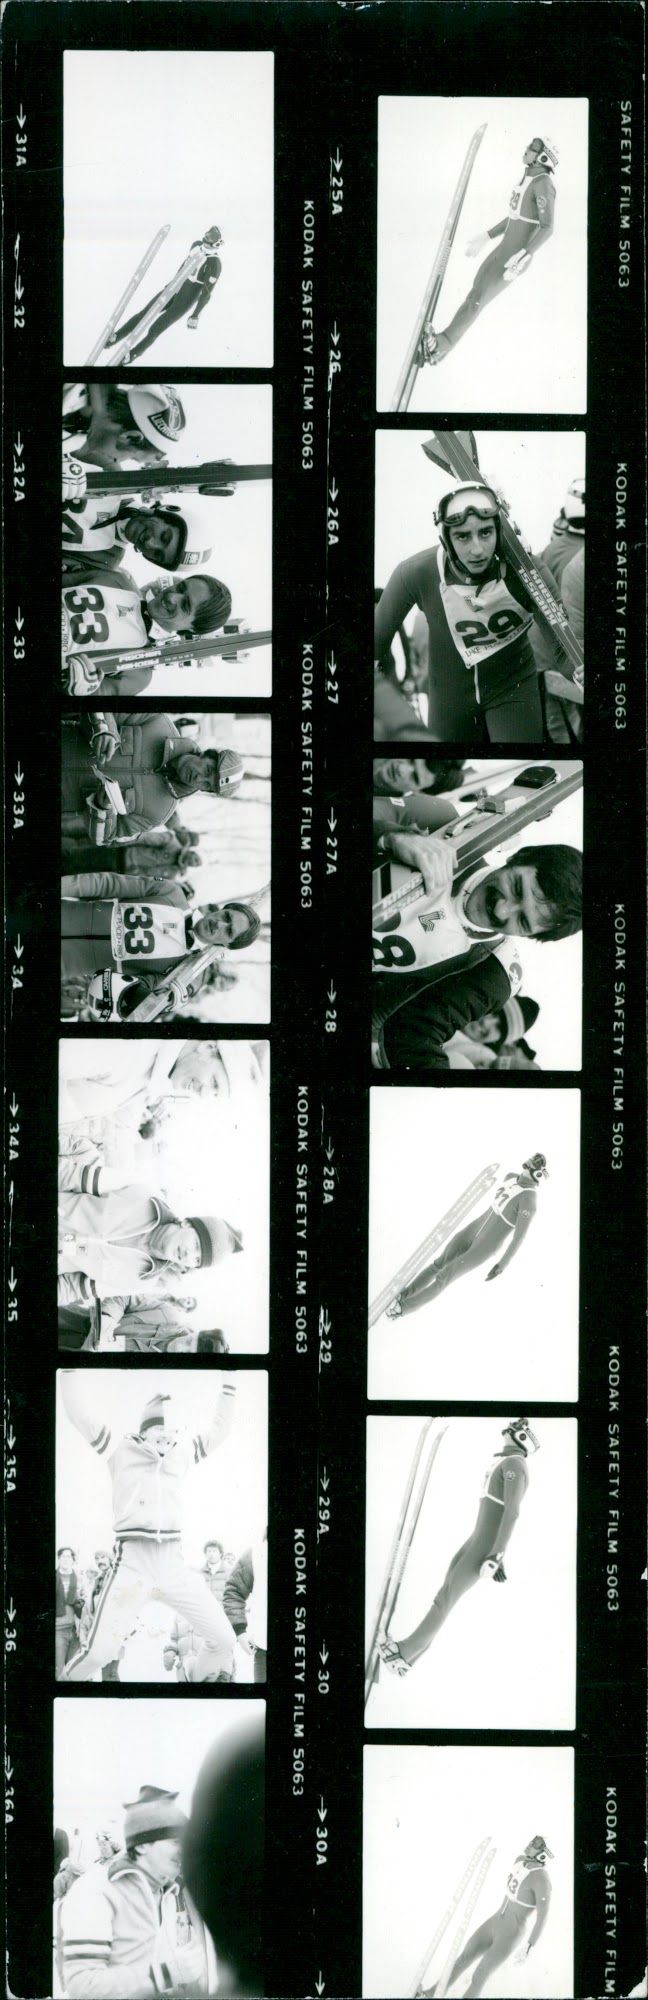 1980 PRINCE SPECIFIC DECKAS KAYNKO CAU OSTWALD DOR SAETRE NORW WOESCHING INN FILM - Vintage Photograph